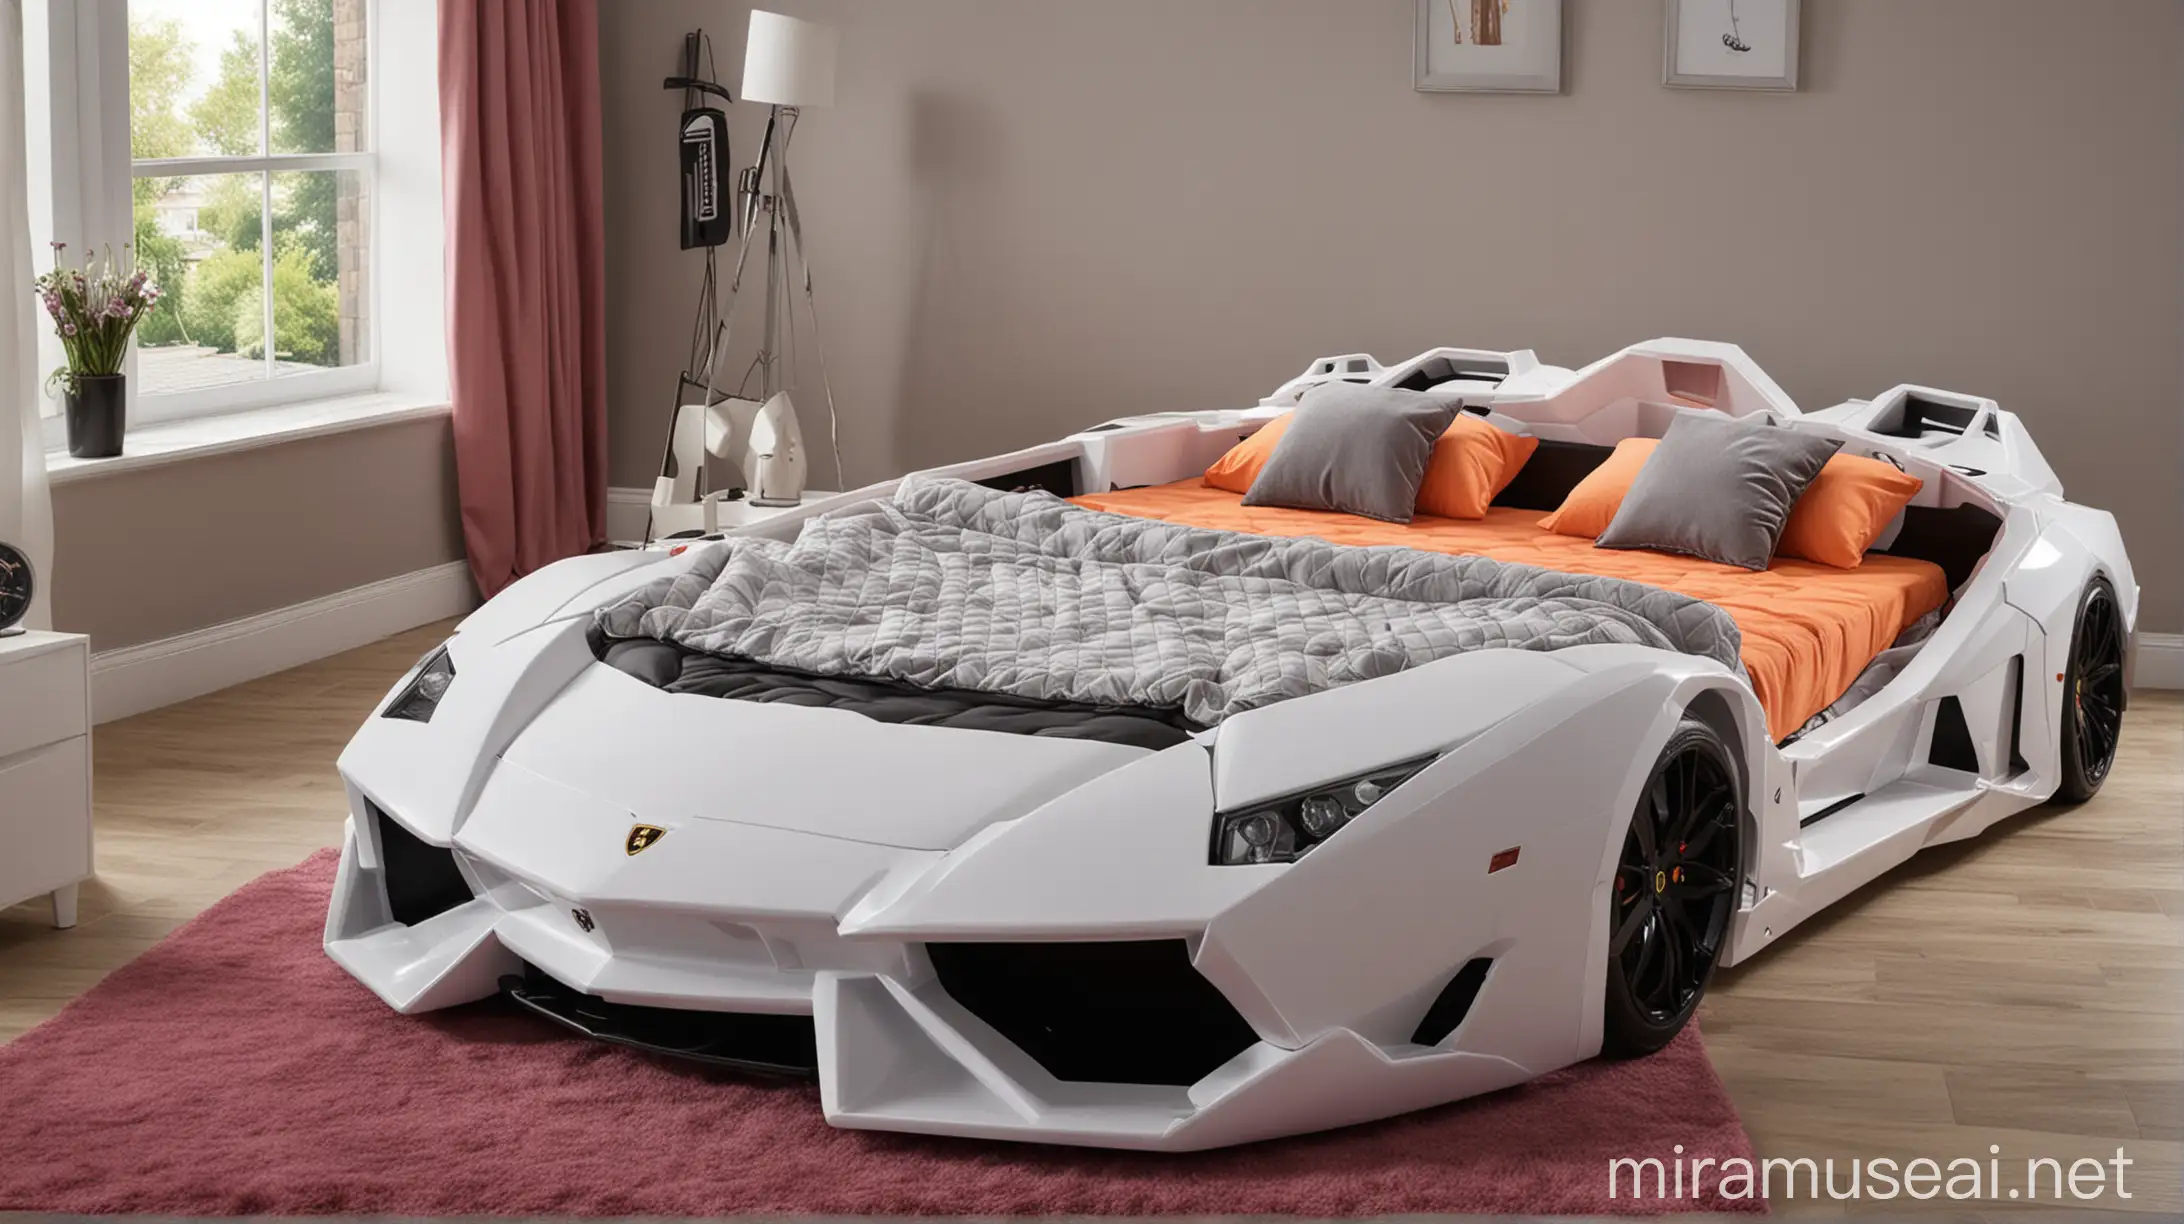 Luxurious Lamborghini Car Shaped Sleeper Bed for Car Enthusiasts